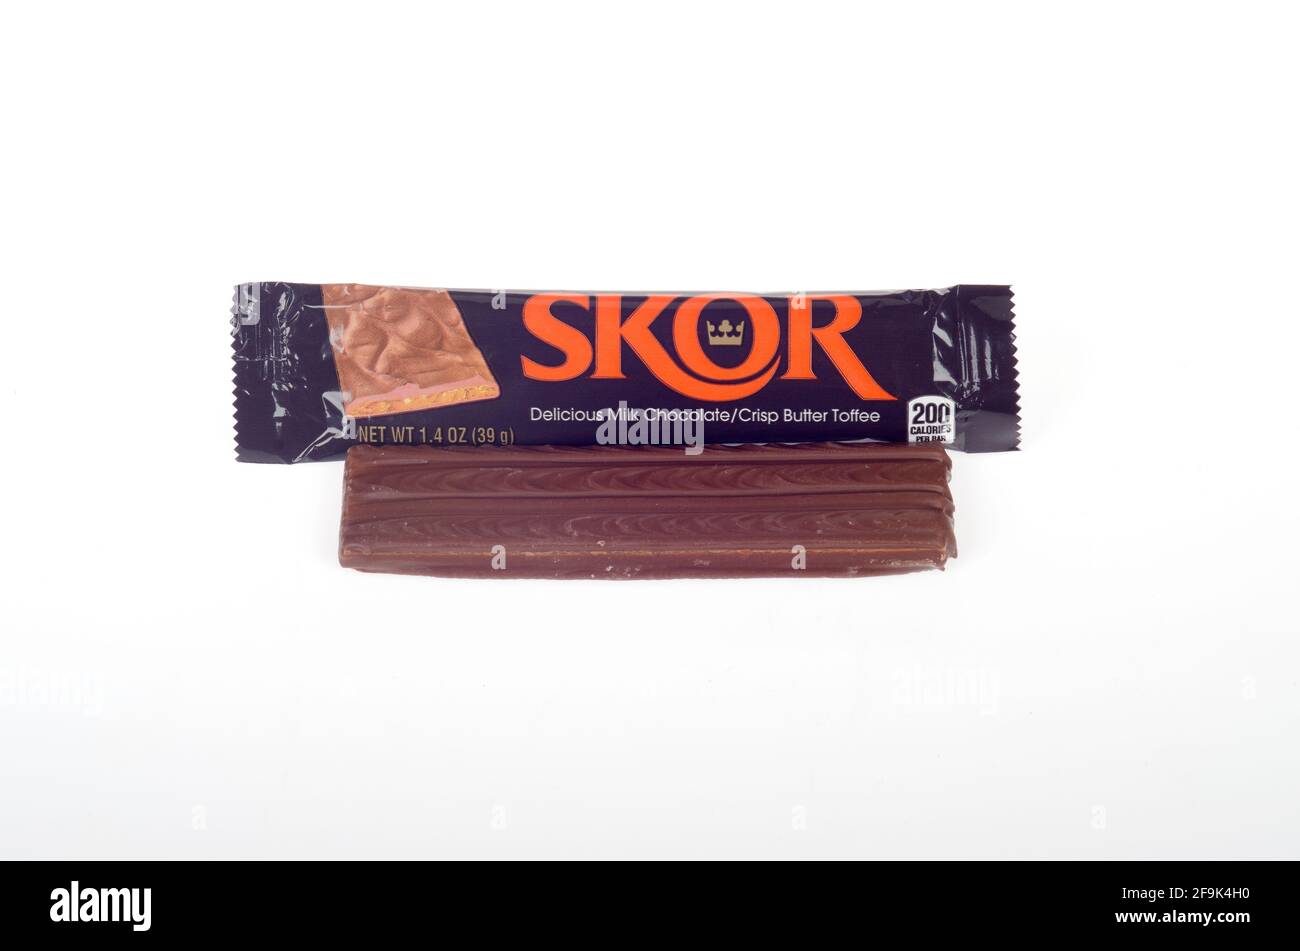 Skor Candy bar Stock Photo - Alamy